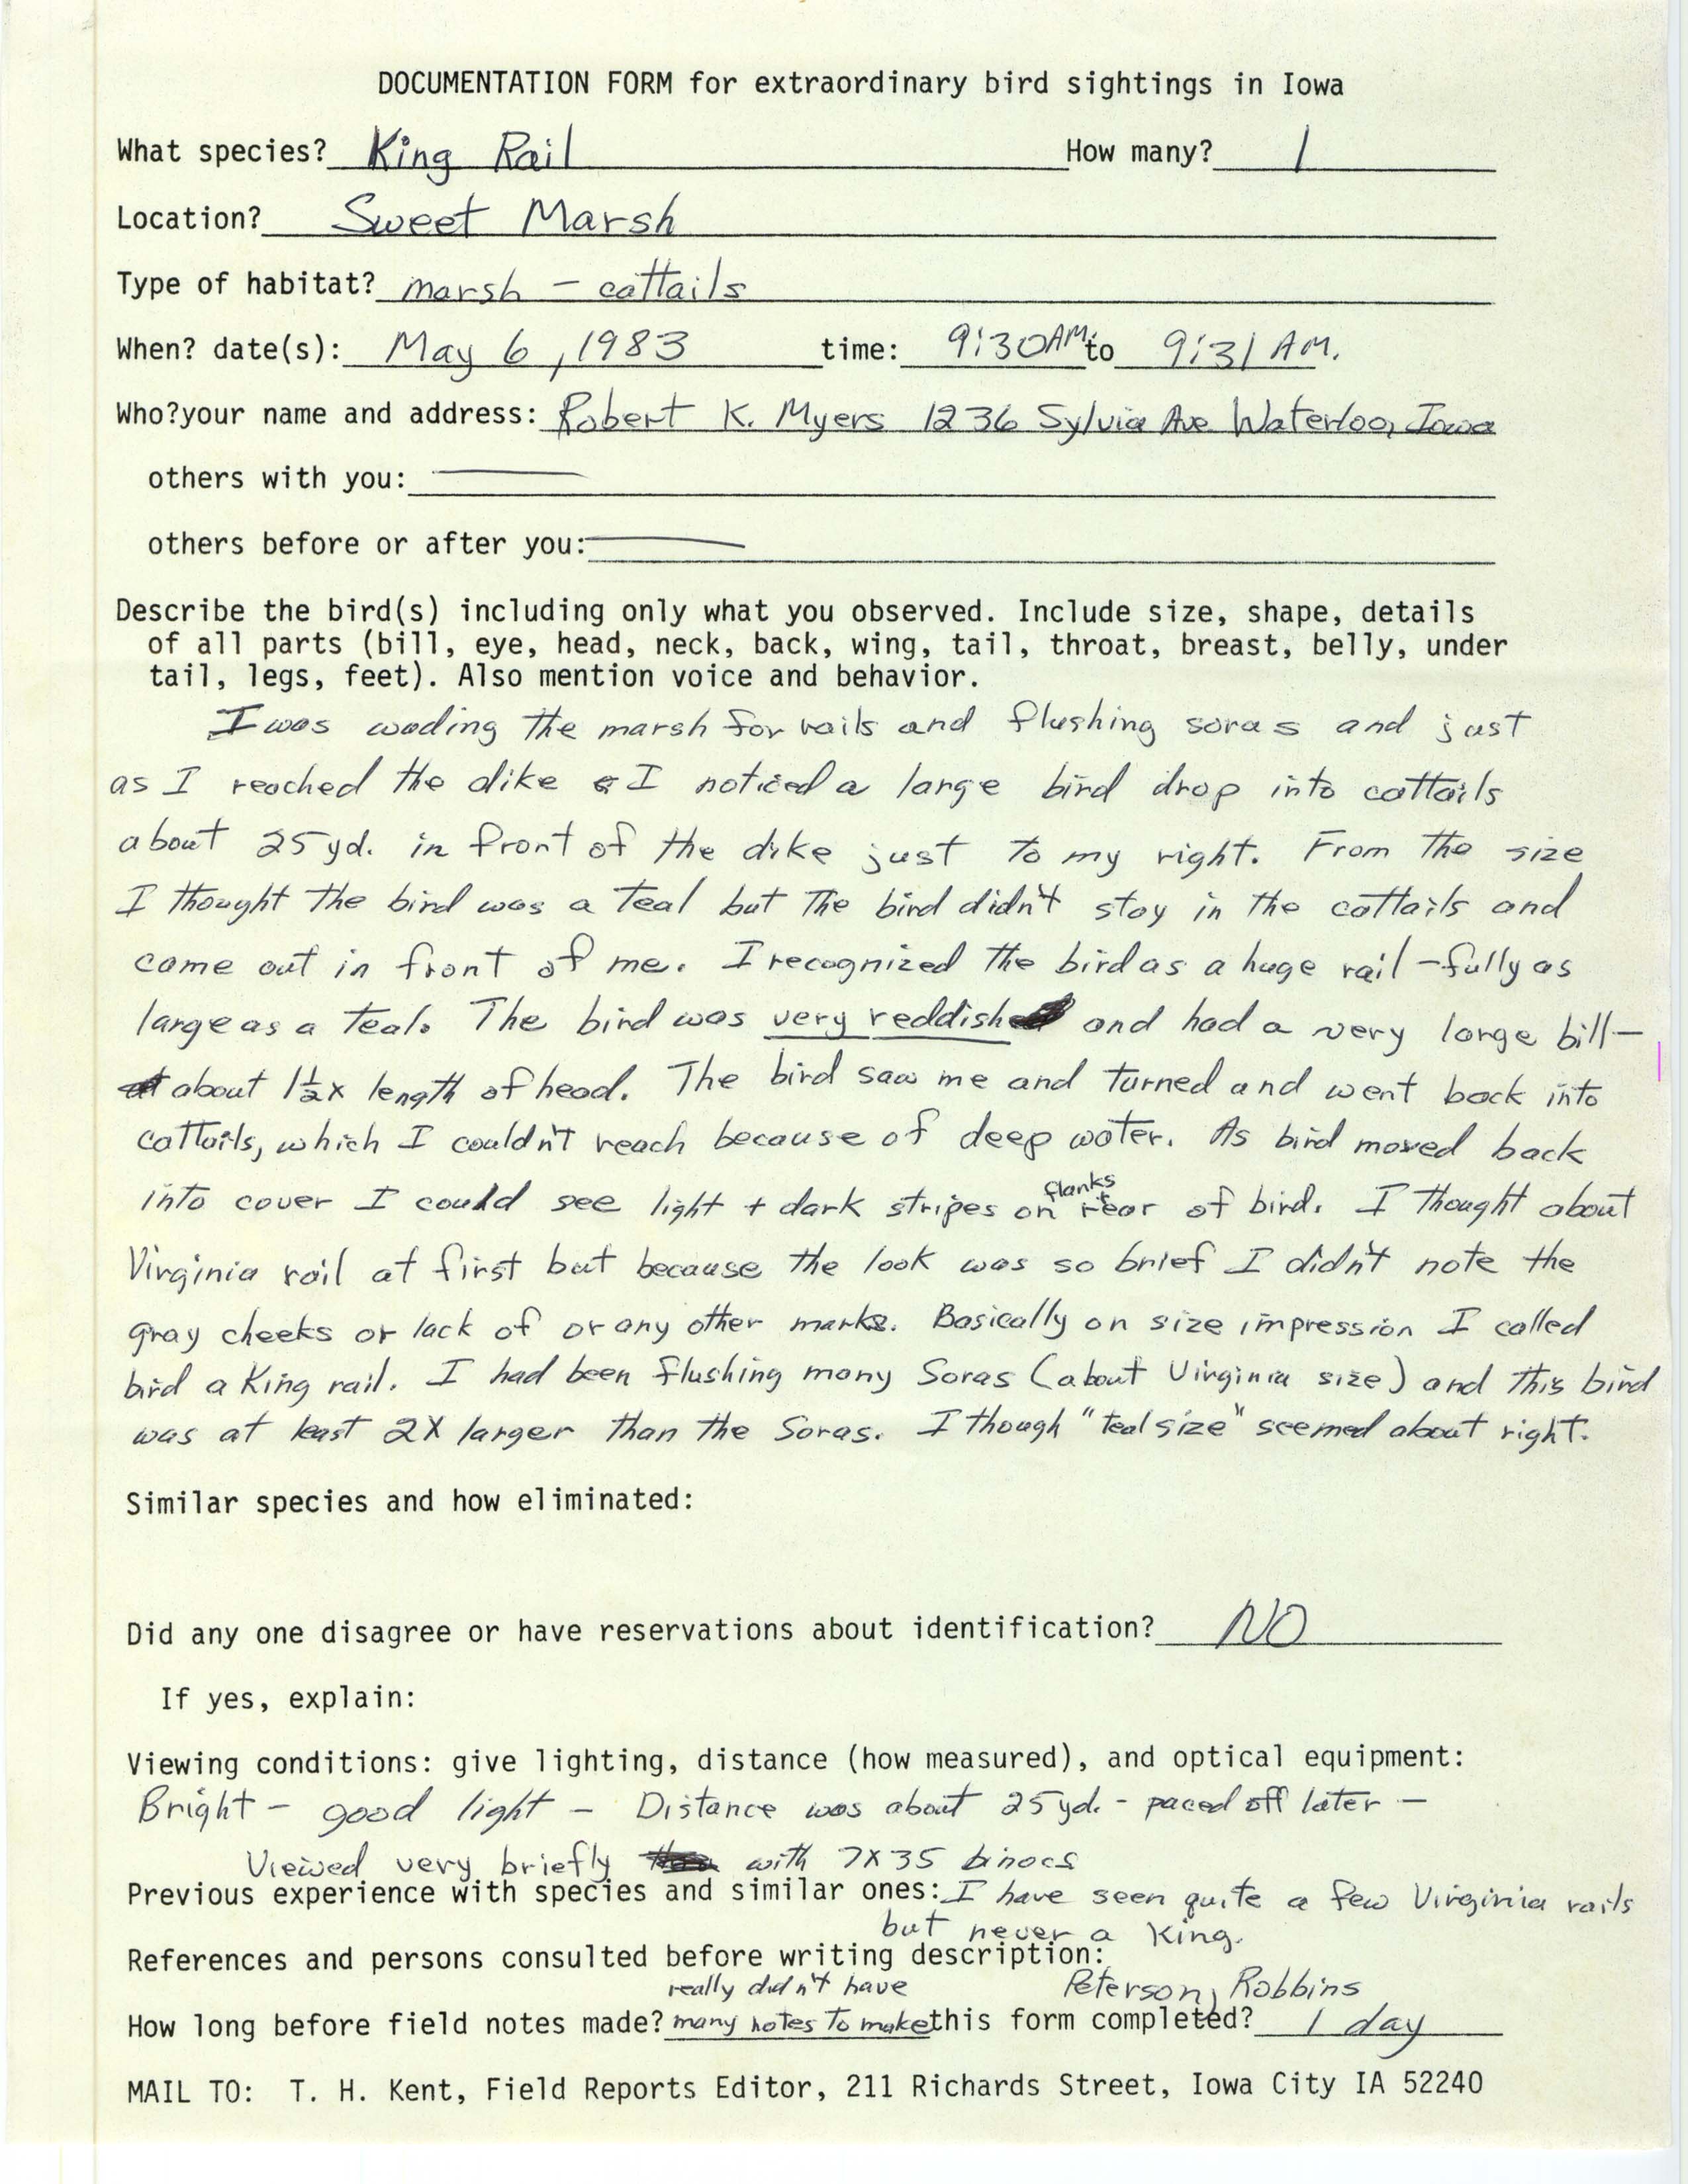 Rare bird documentation form for King Rail at Sweet Marsh, 1983